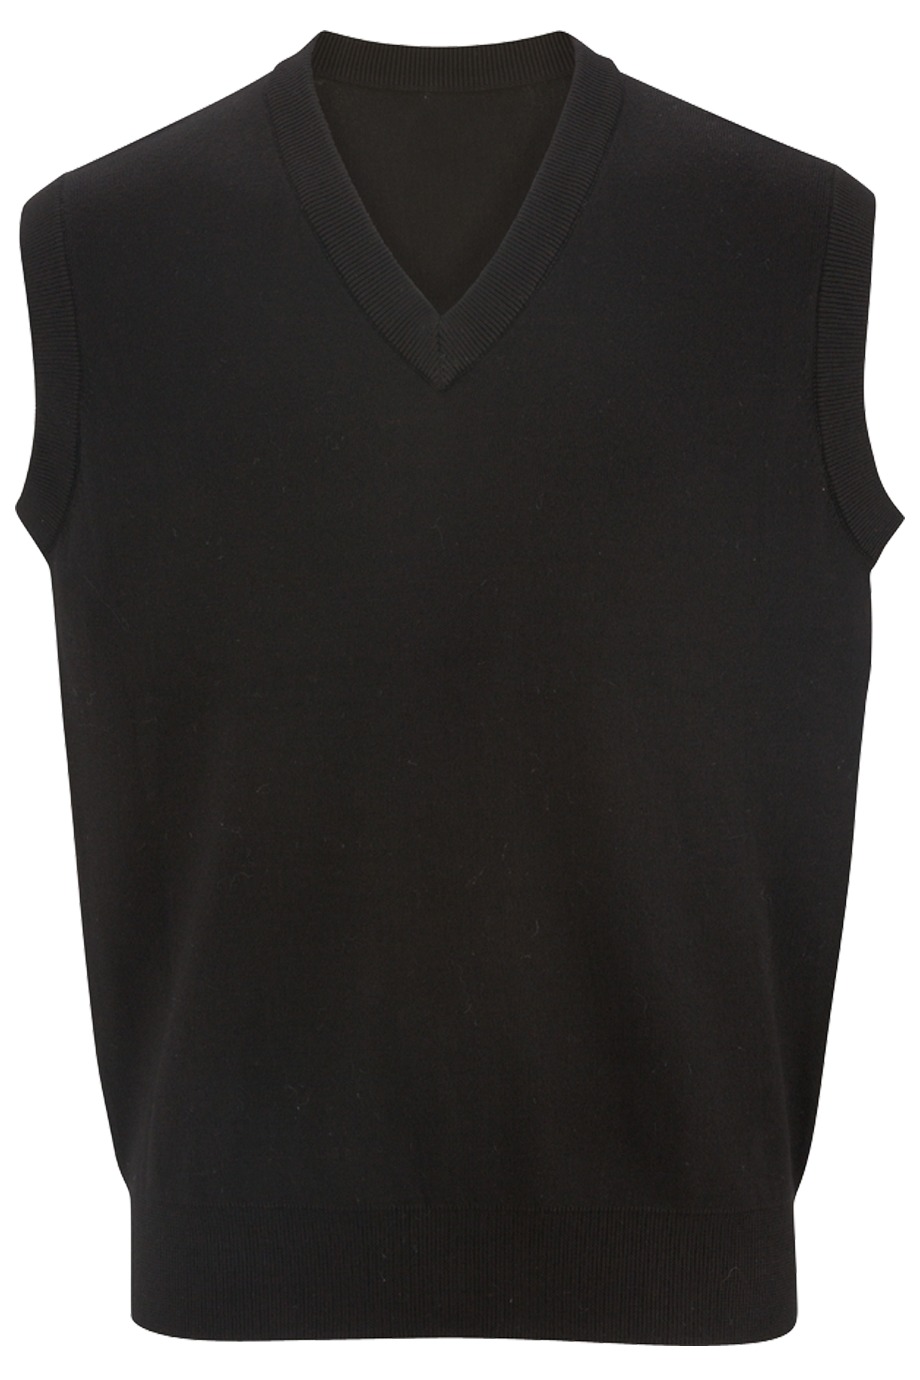 Edwards Garment 4701 - V-Neck Cotton Sweater Vest